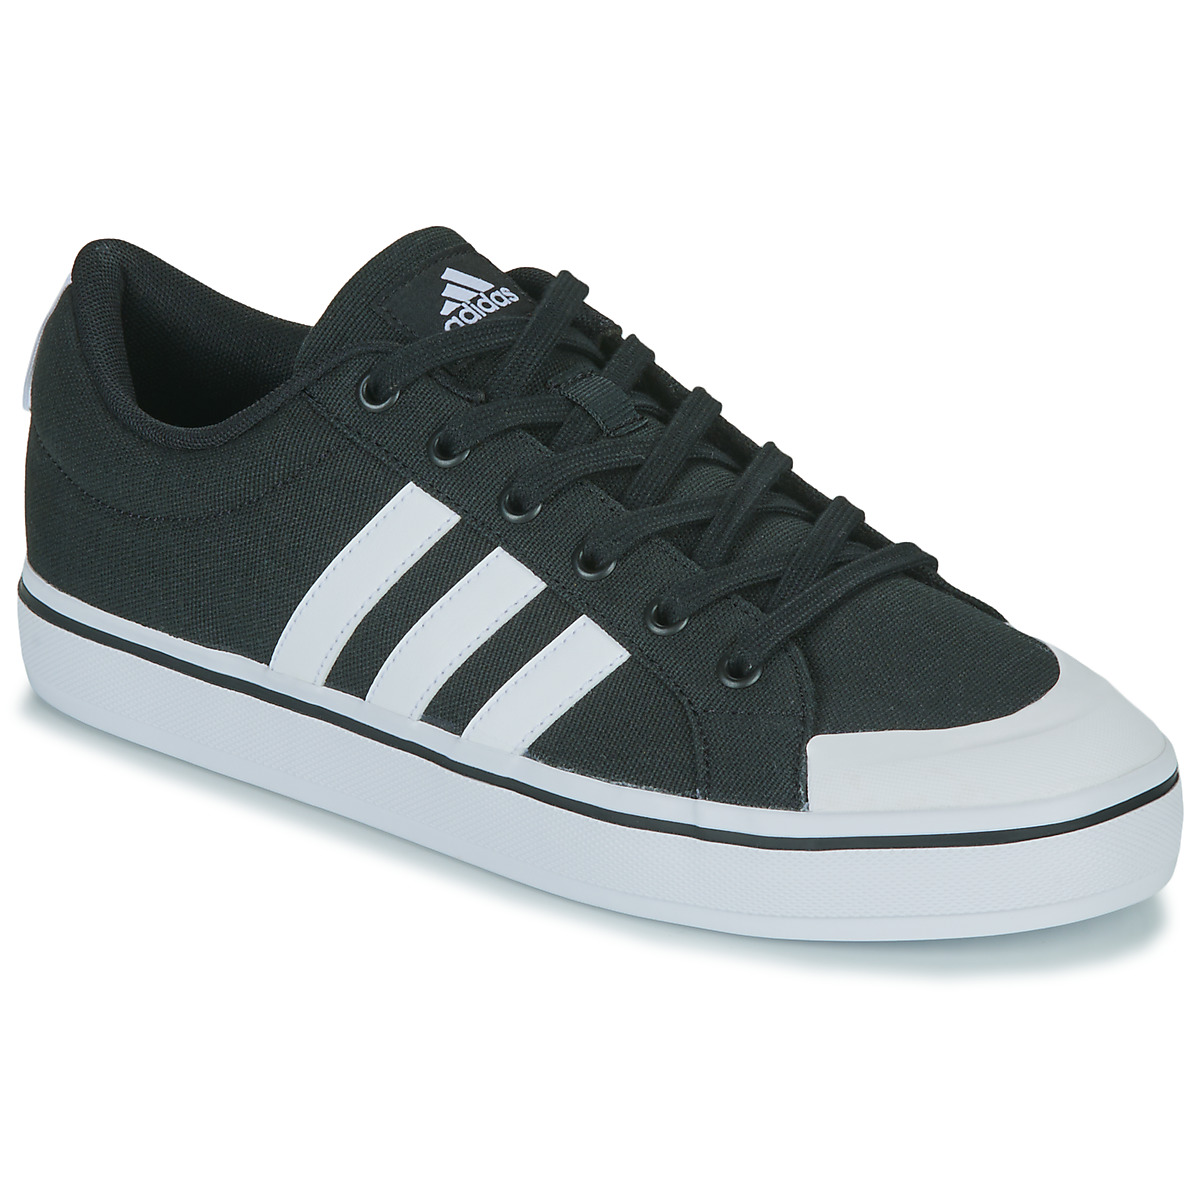 Shoes Men Low top trainers Adidas Sportswear BRAVADA 2.0 Black / White